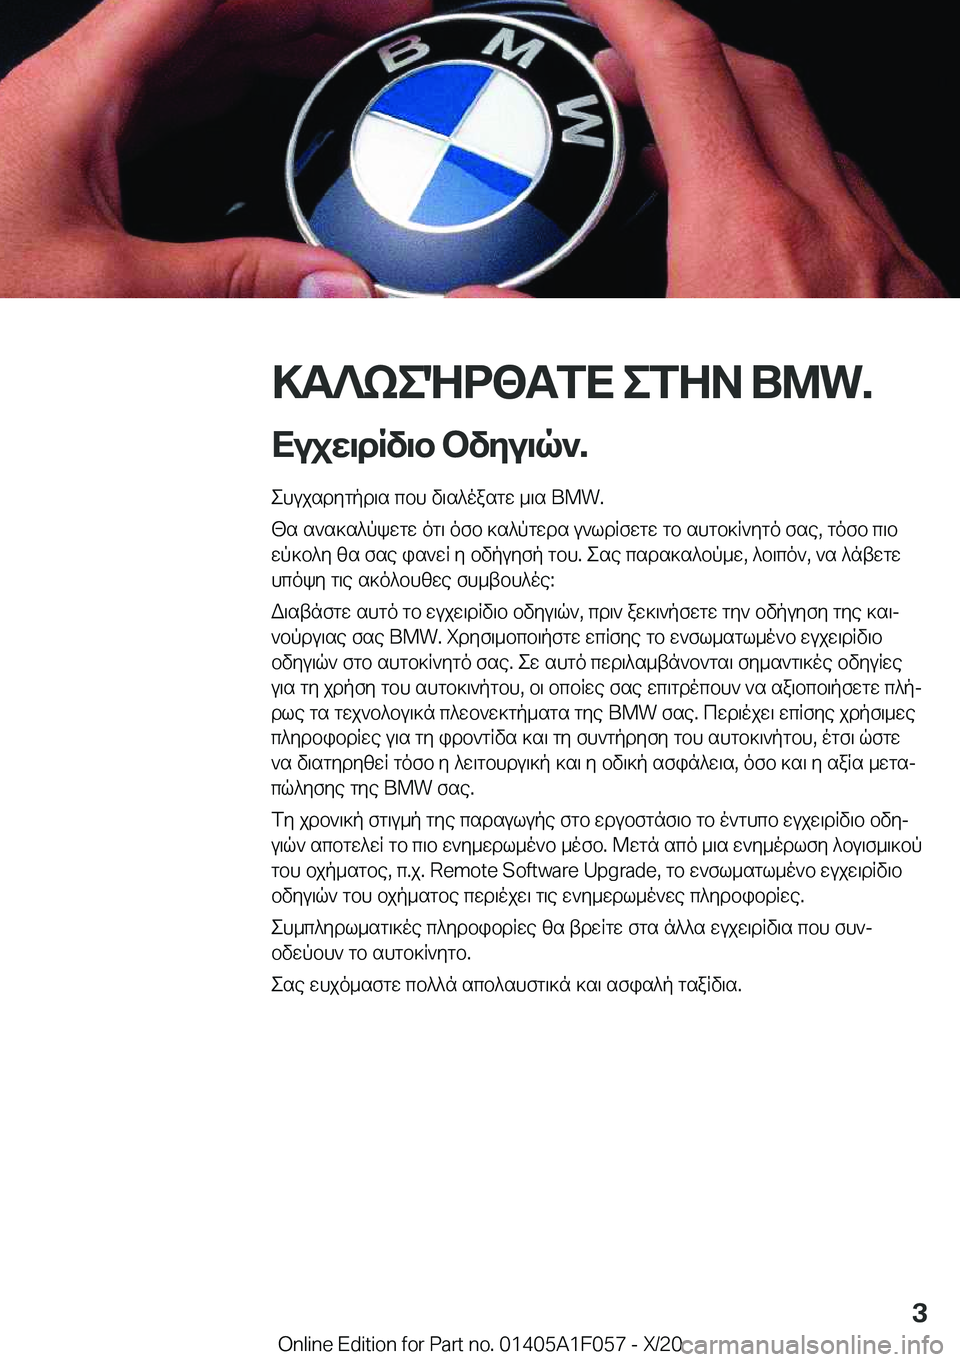 BMW X7 2021  ΟΔΗΓΌΣ ΧΡΉΣΗΣ (in Greek) >T?keNd<TfX�efZA��B�M�W�.
Xujw\dRv\b�bvyu\q`�. ehujsdygpd\s�cbh�v\s^oasgw�_\s��B�M�W�.
[s�s`s]s^pkwgw�og\�ofb�